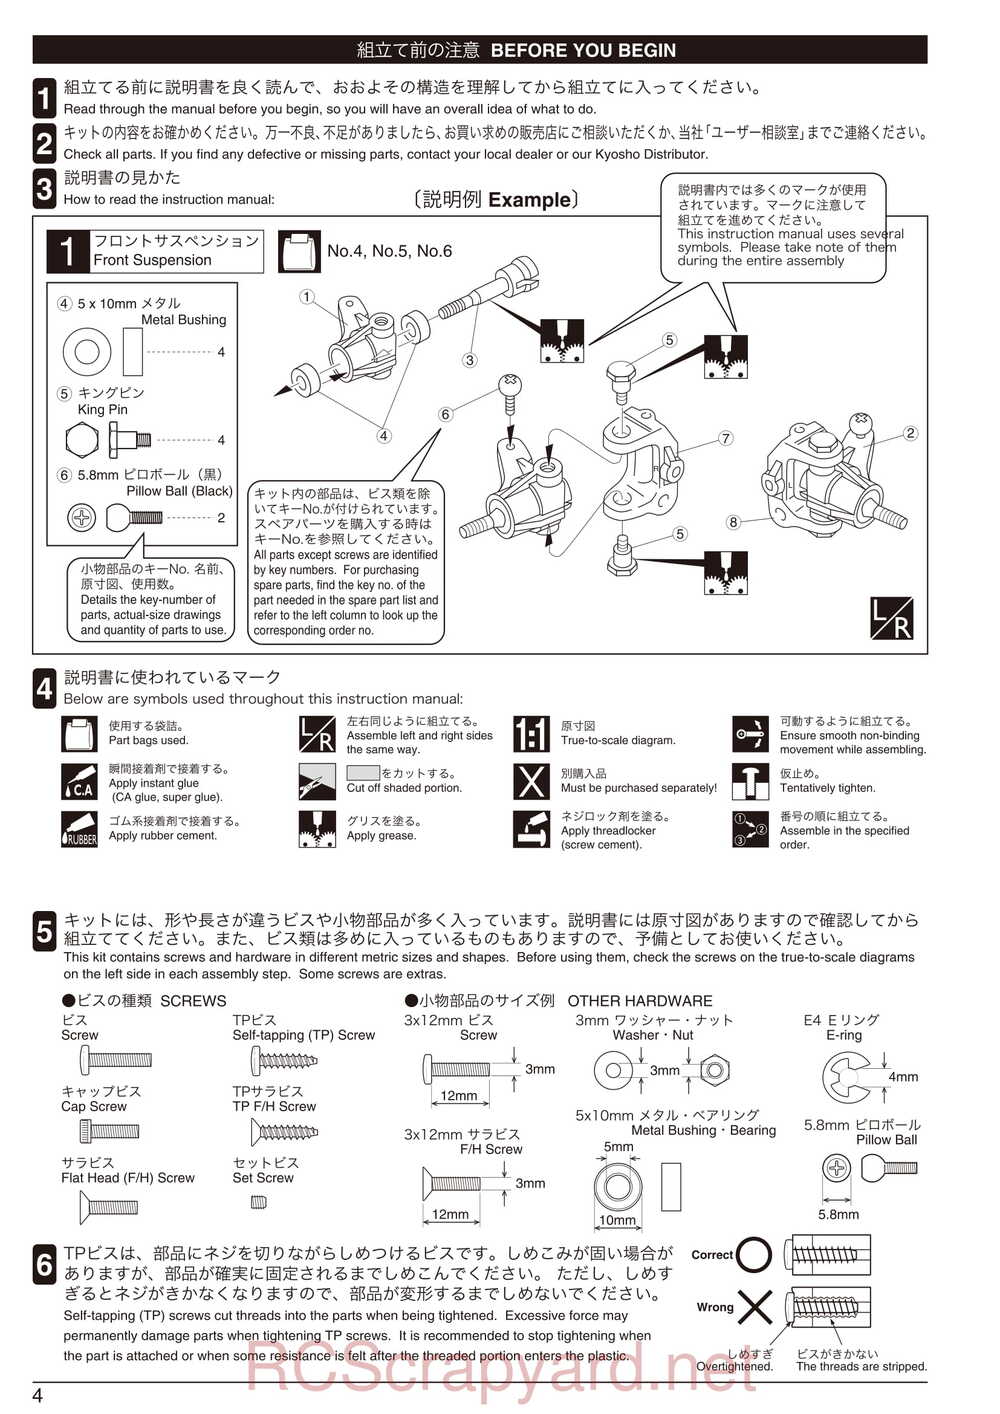 Kyosho - 31003 - SPADA-09L - Manual - Page 04